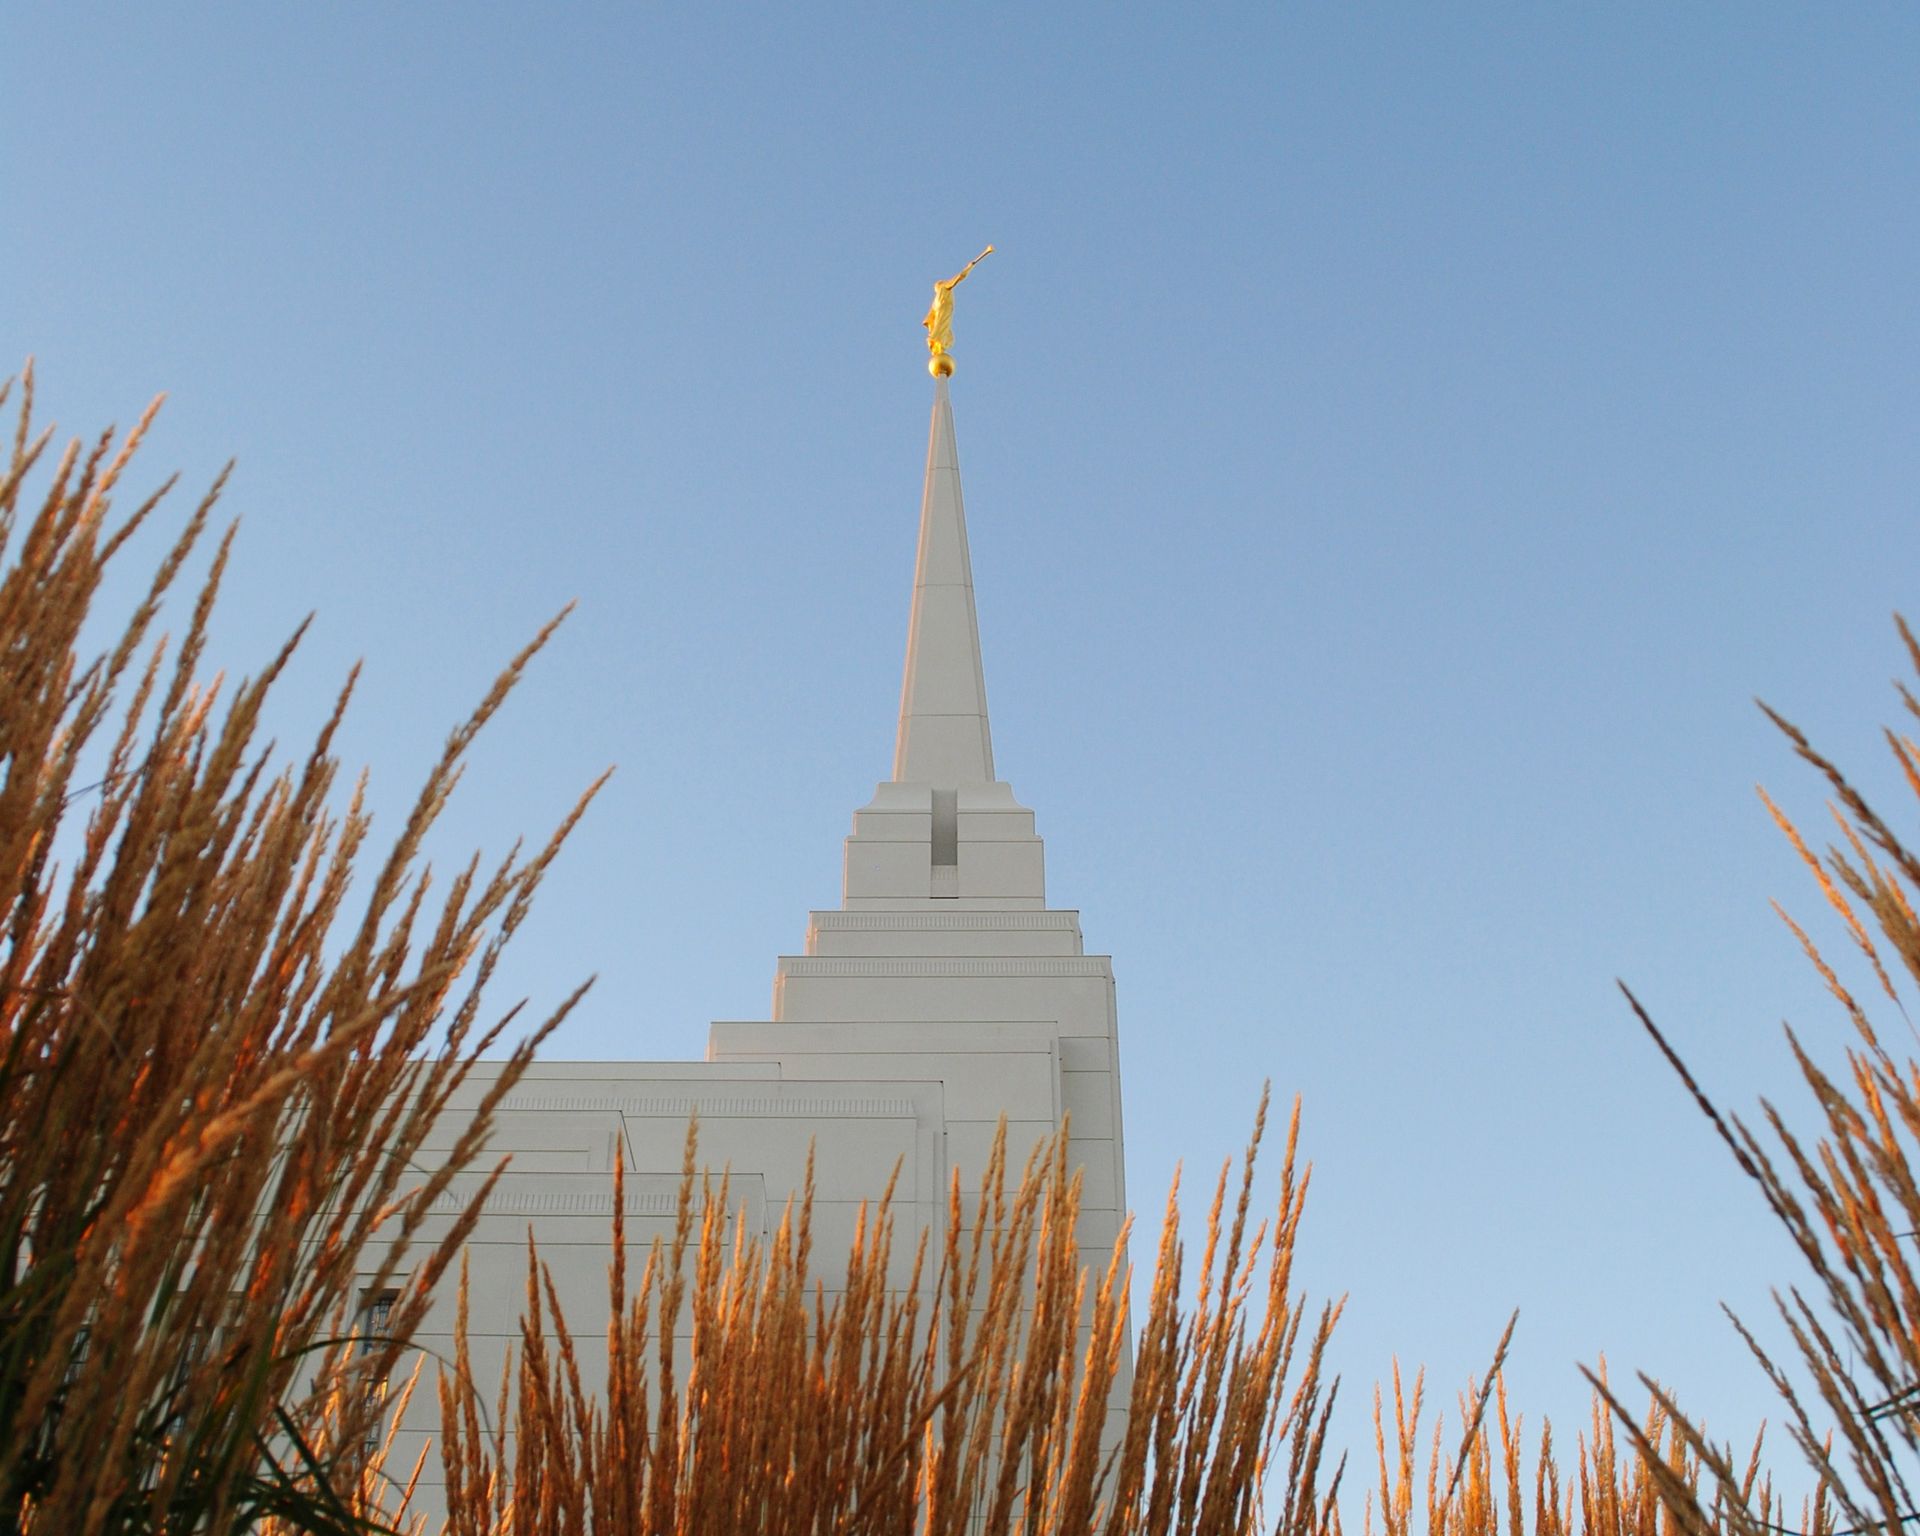 The Rexburg Idaho Temple spire, including scenery.